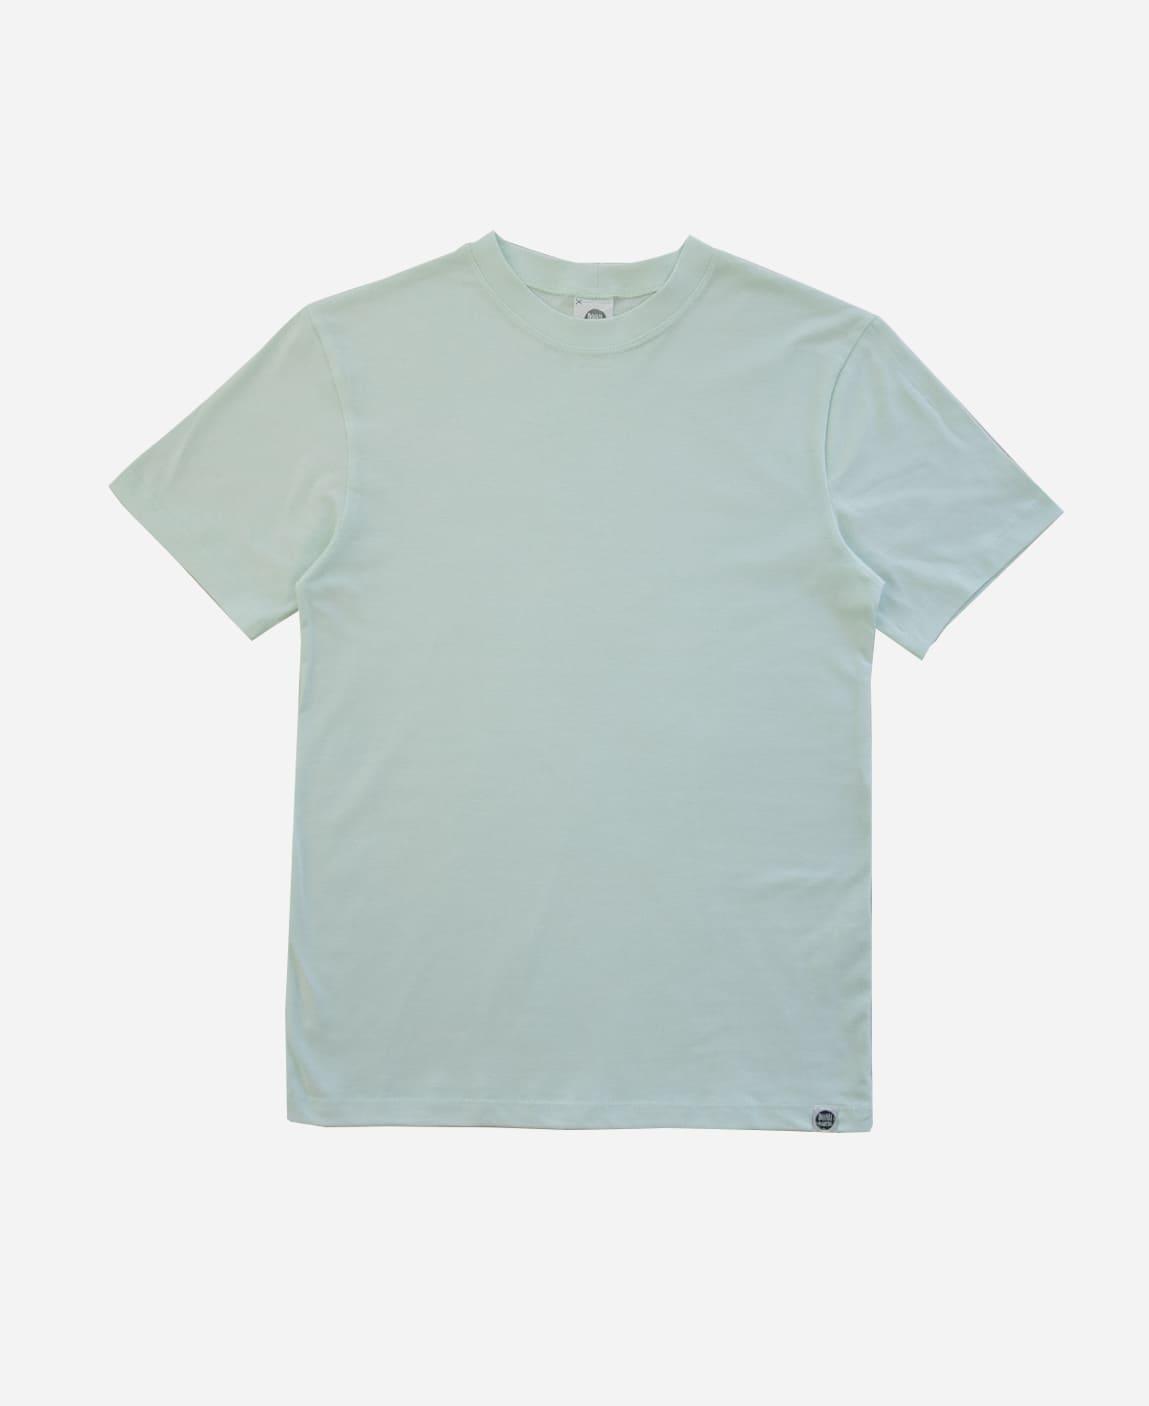 Camiseta Adulto Unissex Liso Mint - MiniMalista Baby - b2b, com-desconto-mm10, Meia Estação, Menino, minime, Neutro, new, tab-tam-cam-adulto-2, Unissex -bebê-minimalista-estiloso